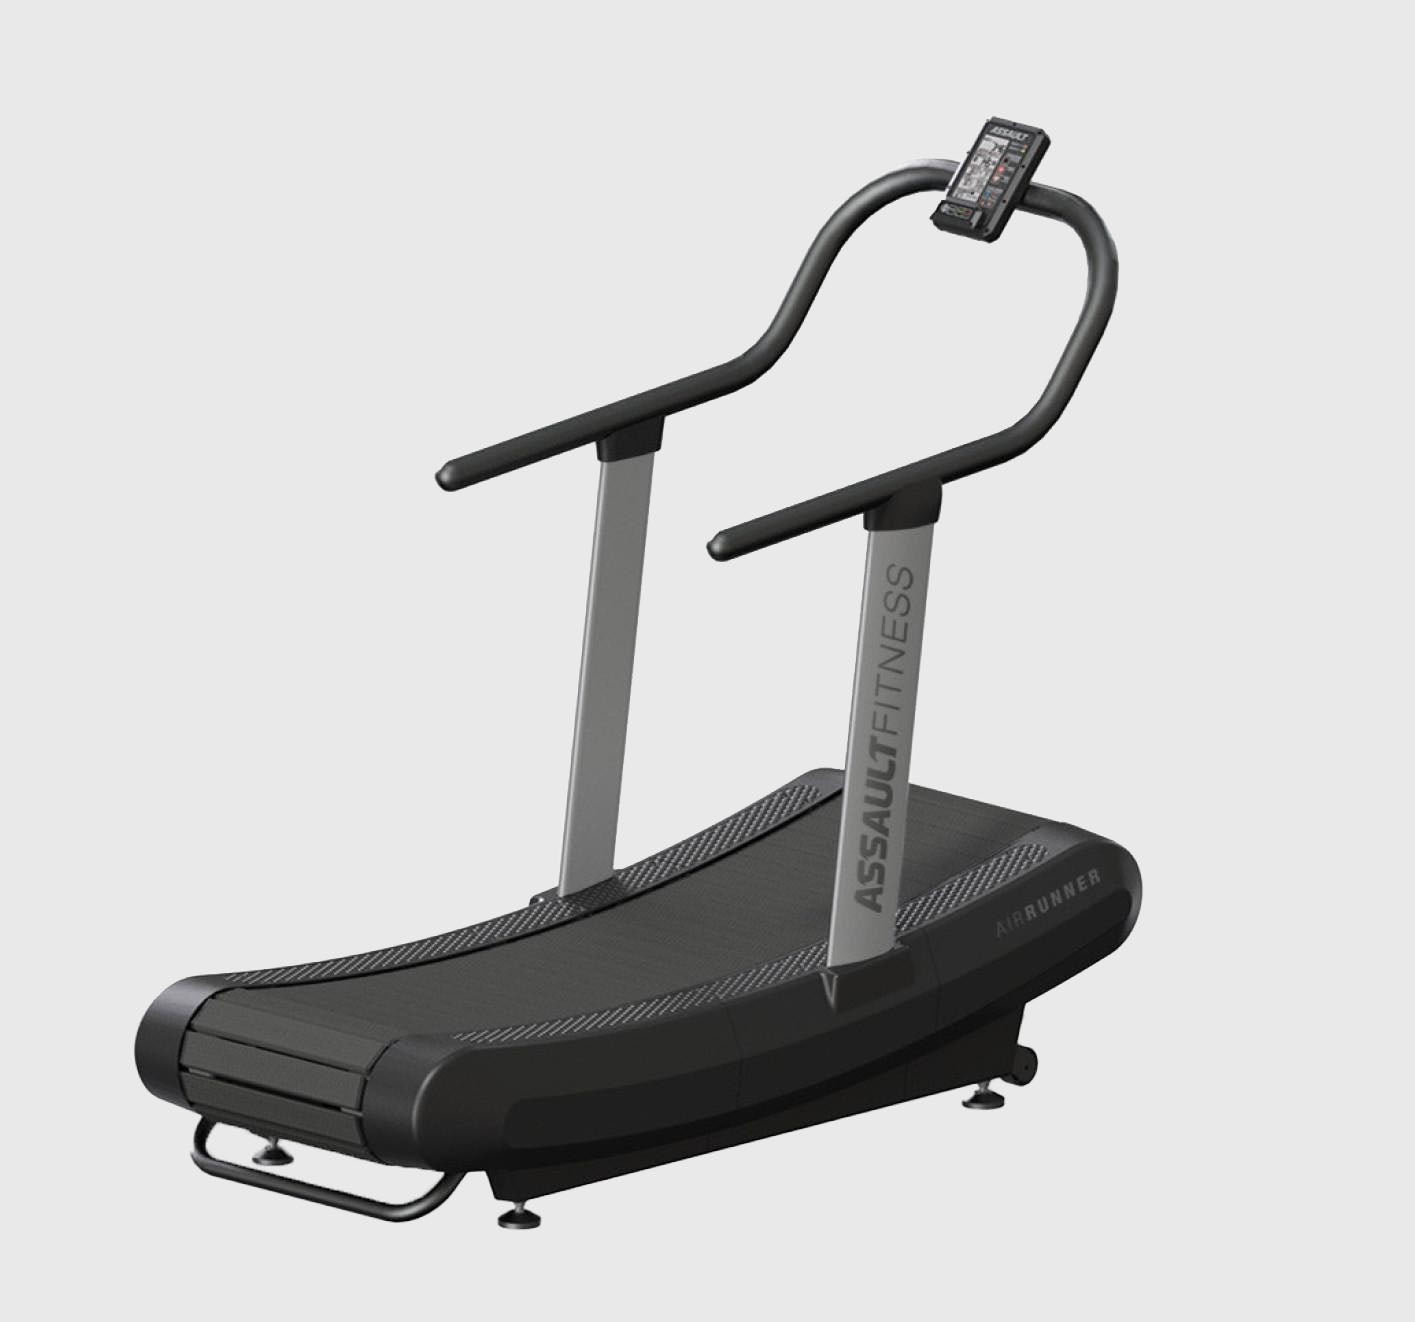 Assault AirRunner Curved Treadmill